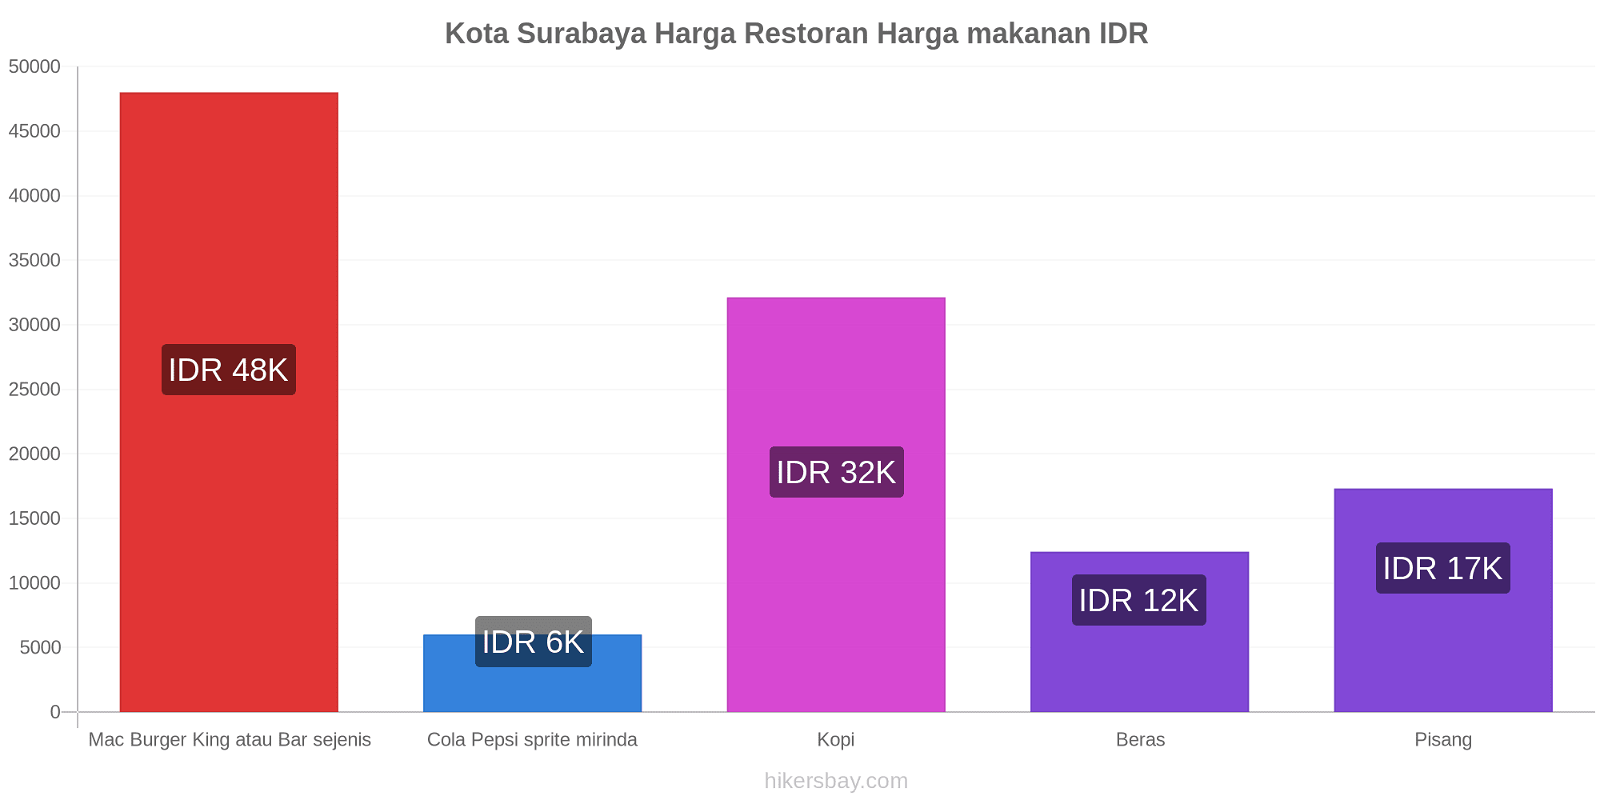 Kota Surabaya perubahan harga hikersbay.com